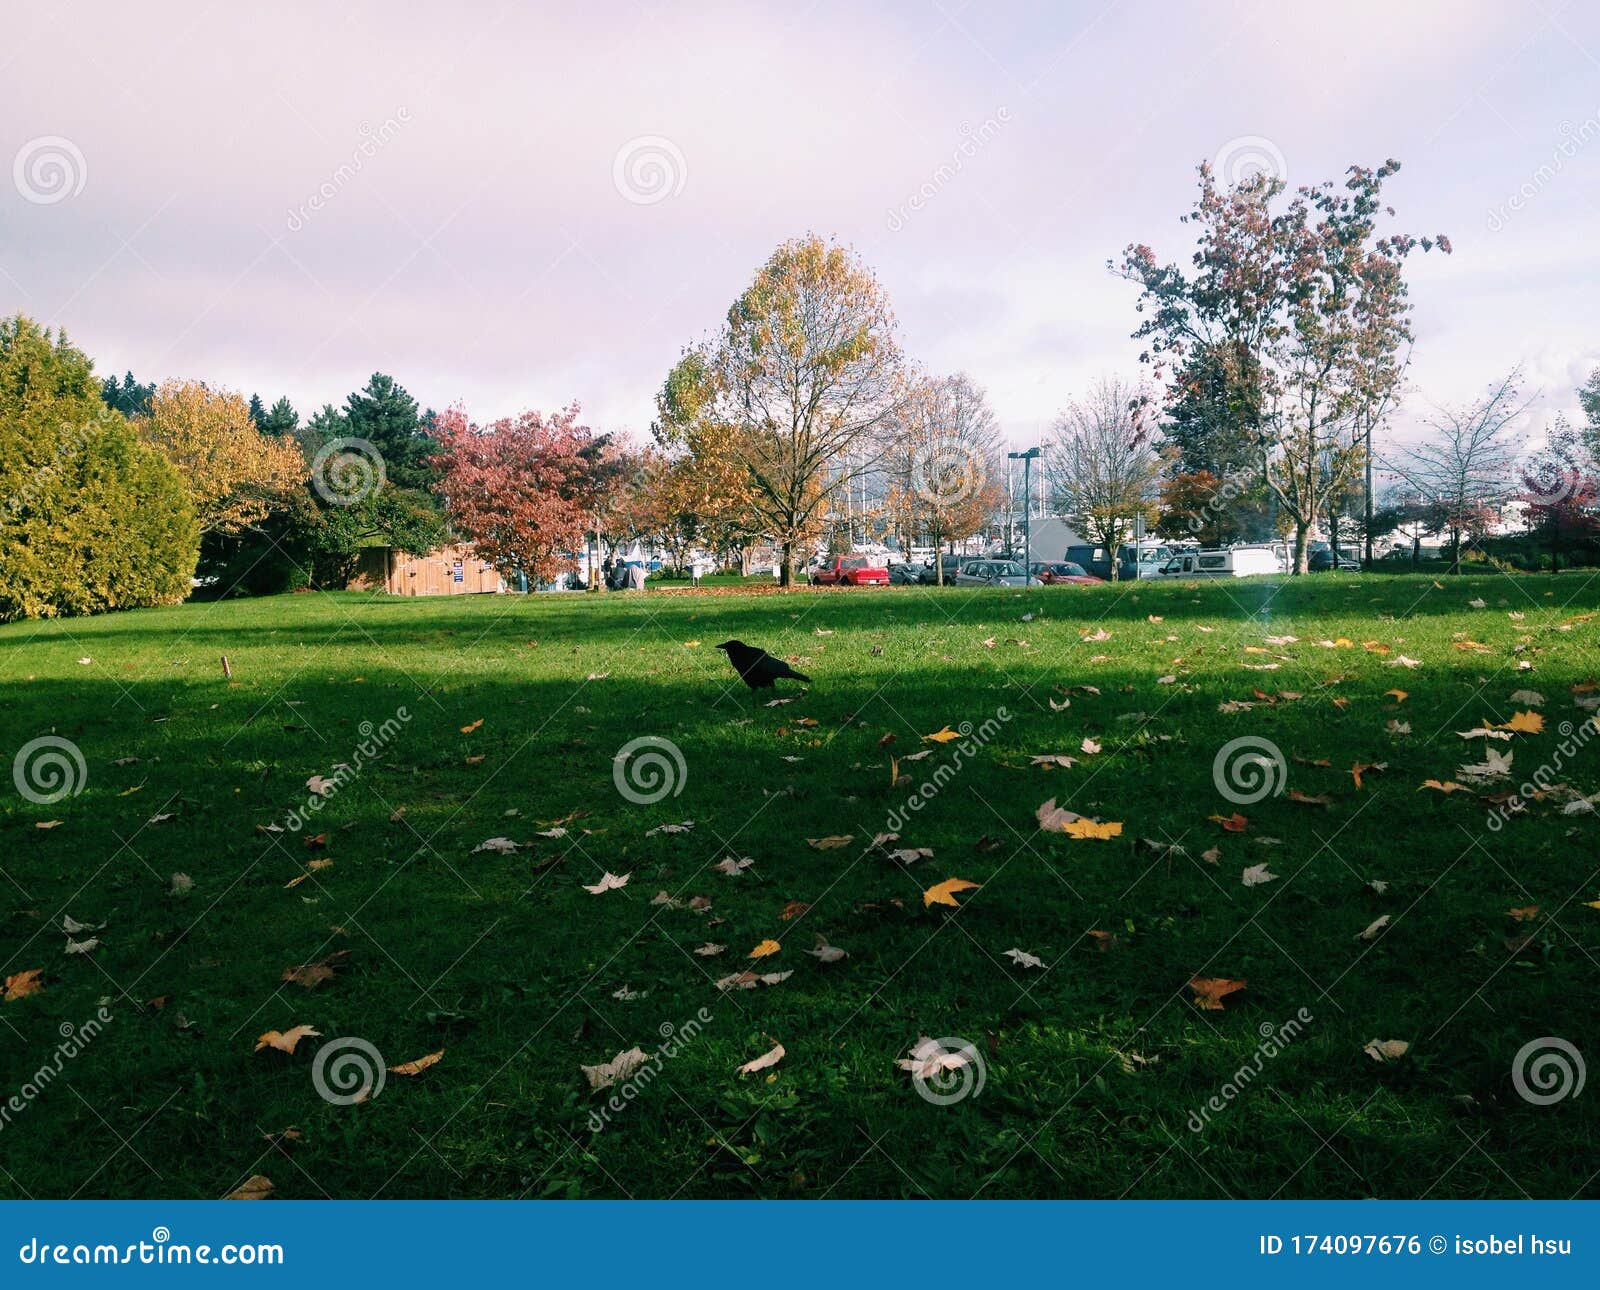 autumn scene in stanley park, vancouver canada